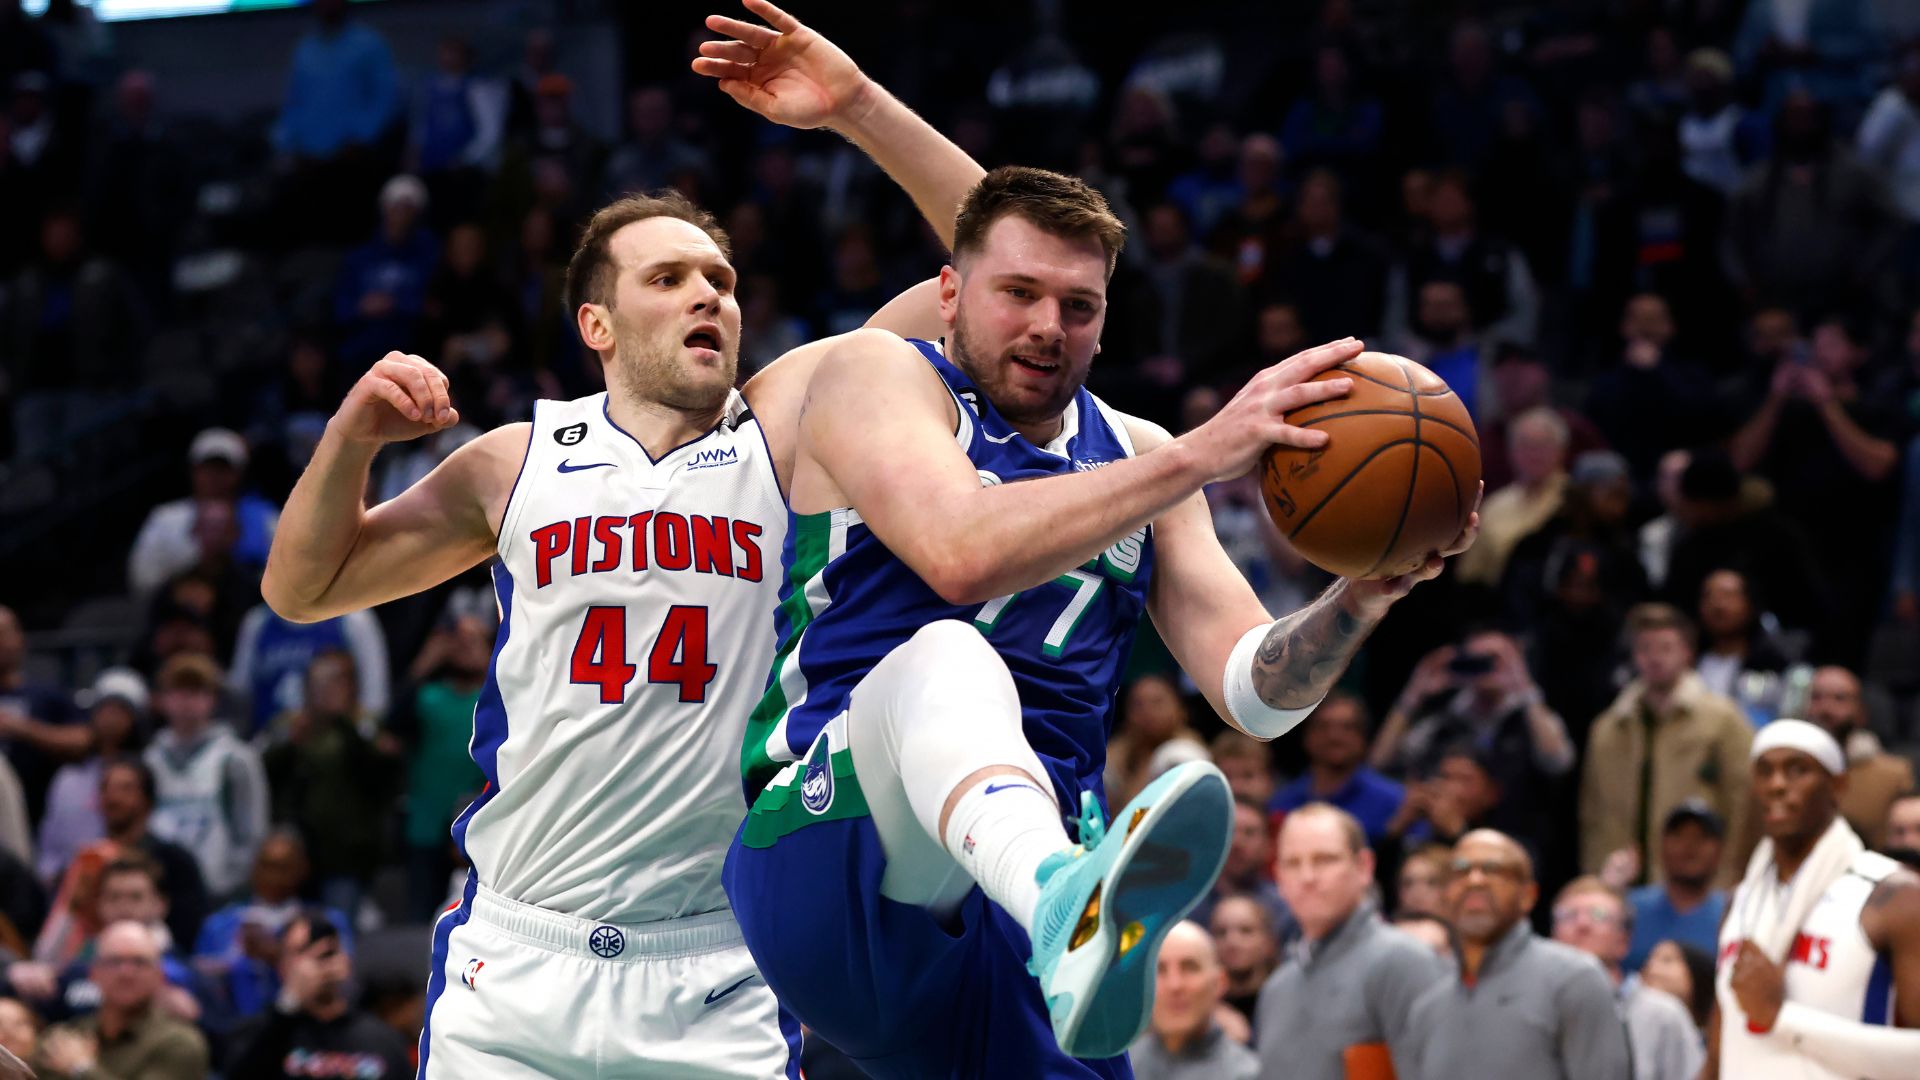 Dallas Mavericks de Luka Doncic vence o Detroit Pistons na NBA